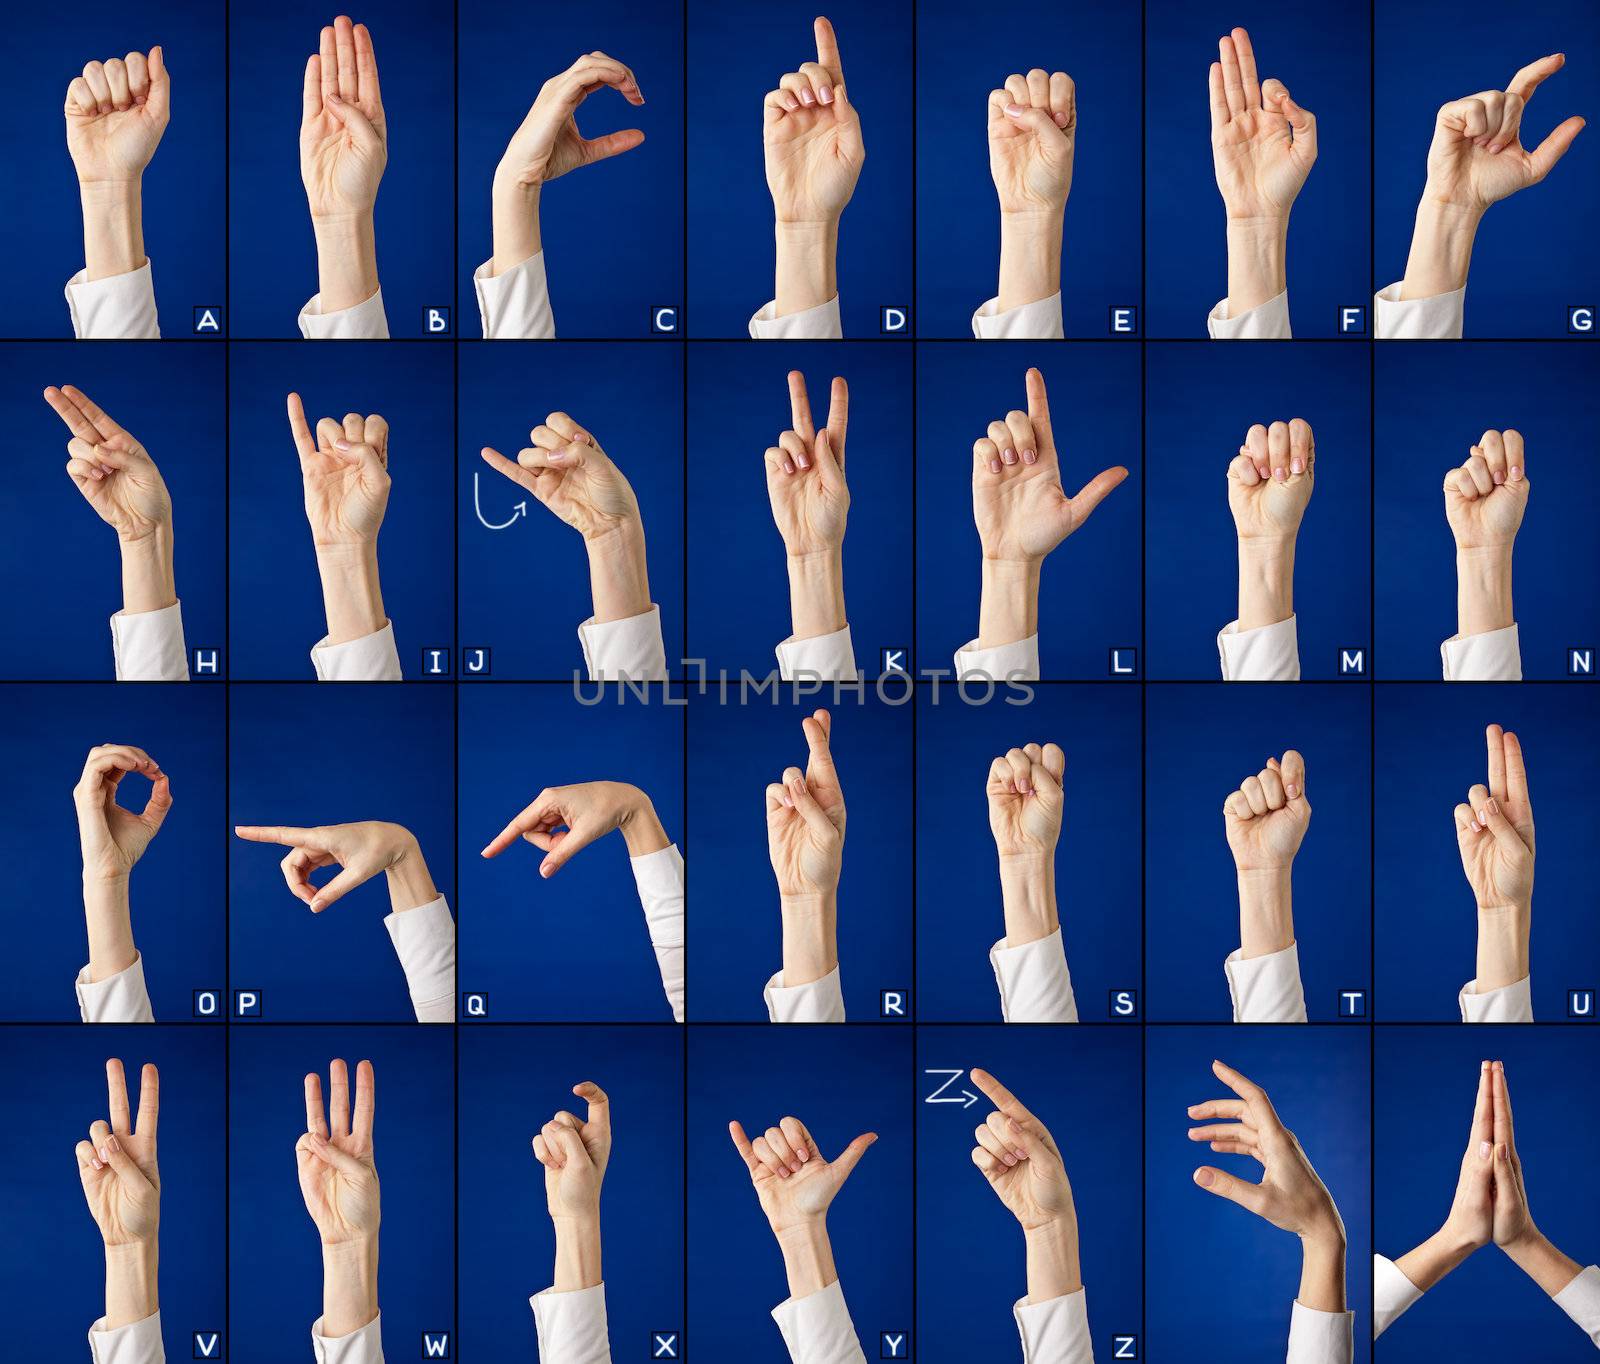 Finger spelling of alphabet in sign language, on blue background